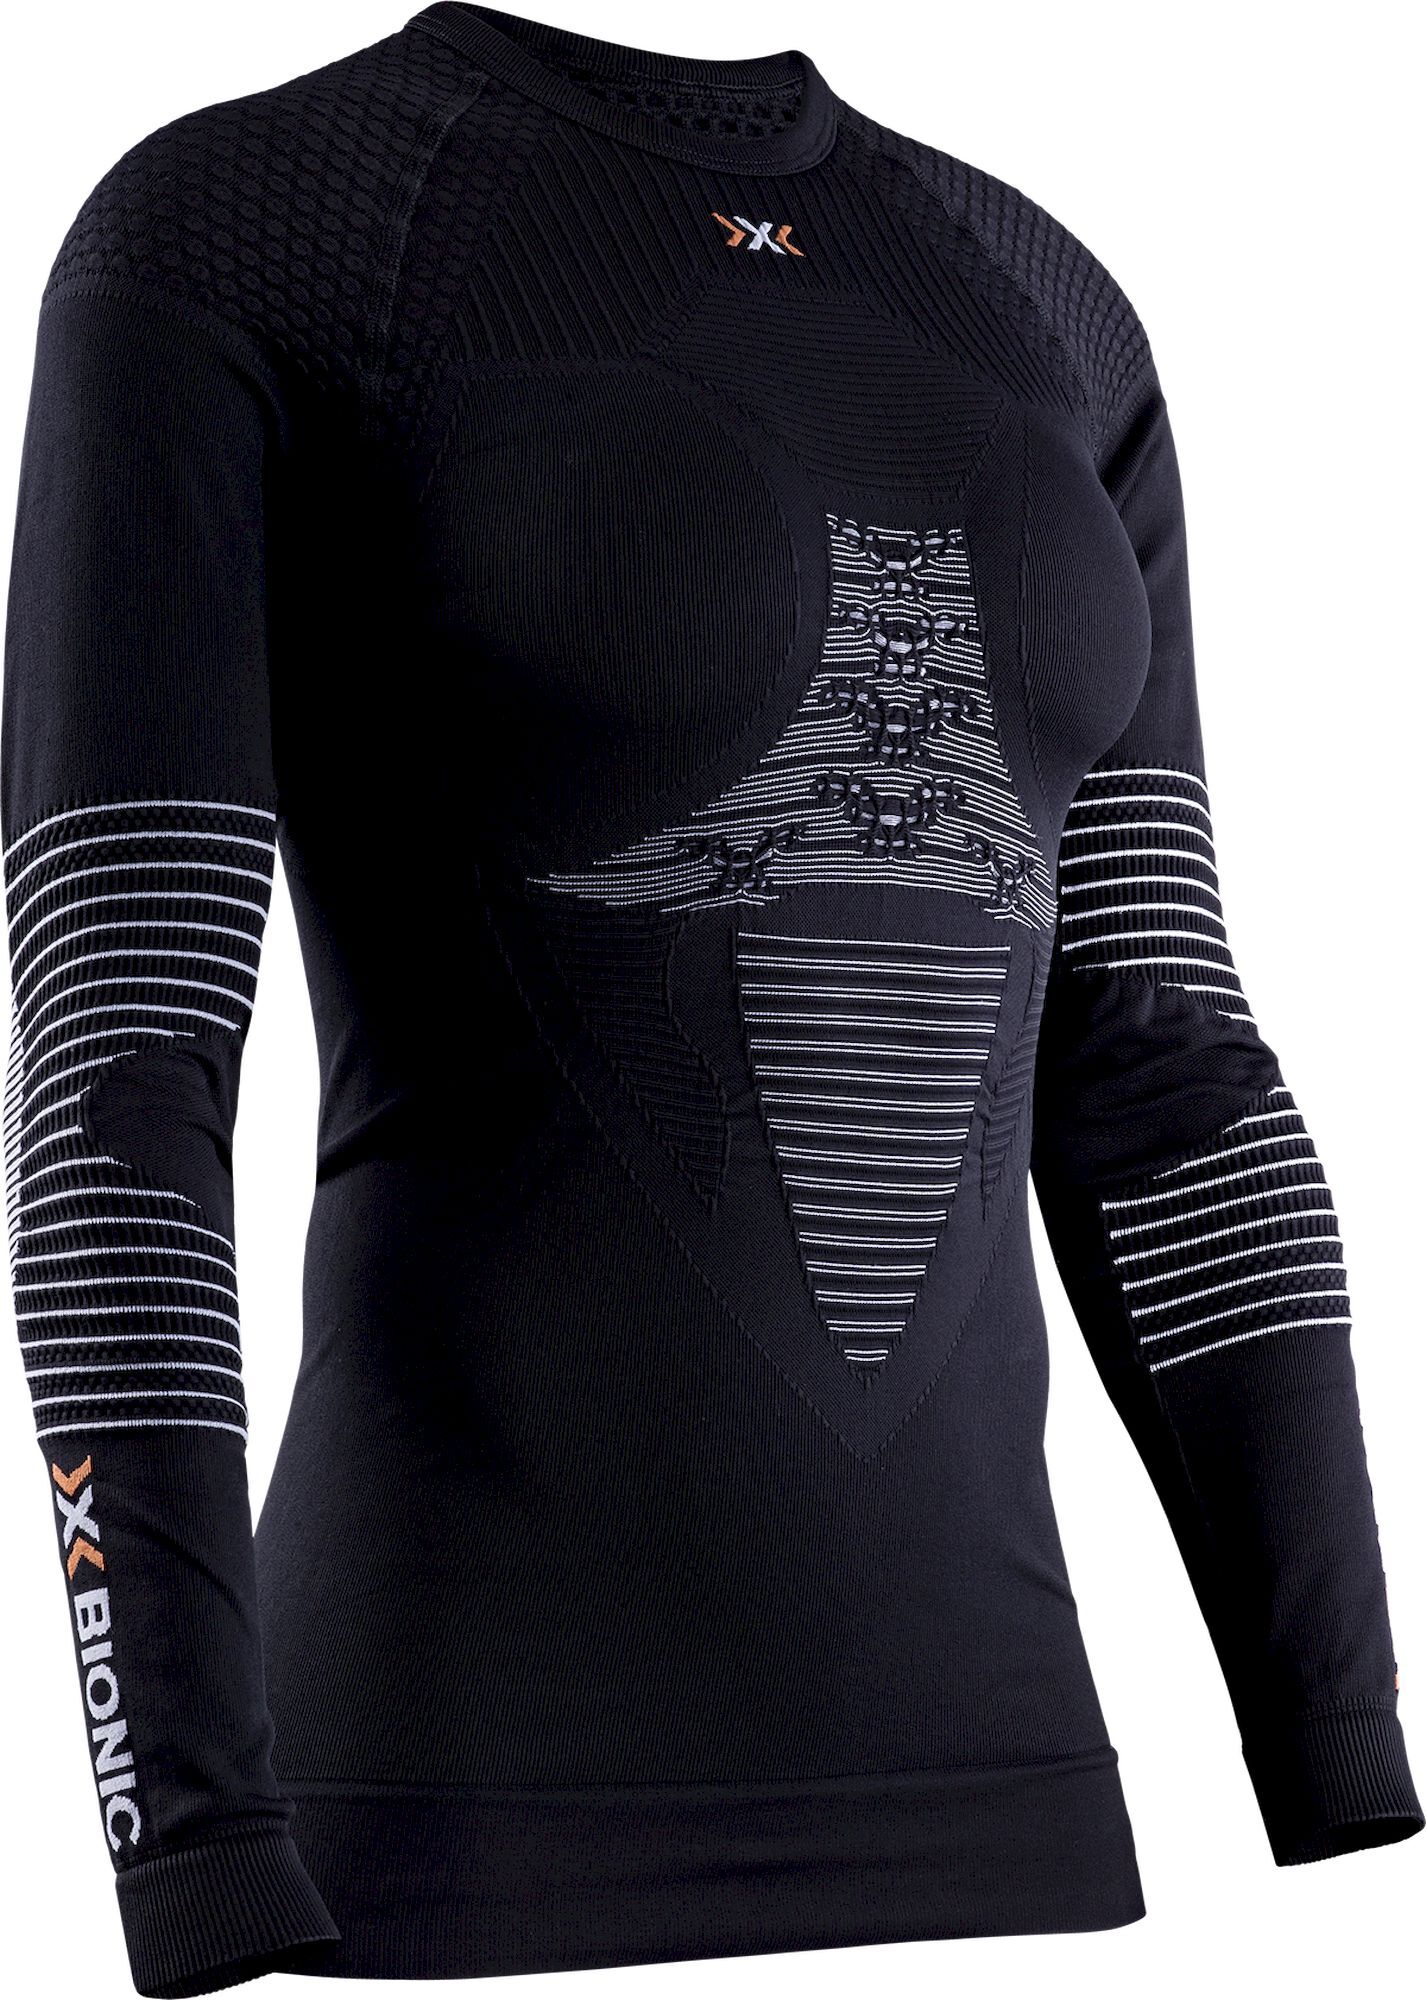 X-Bionic Energizer 4.0 Shirt Long Sleeve - Underkläder syntet - Dam